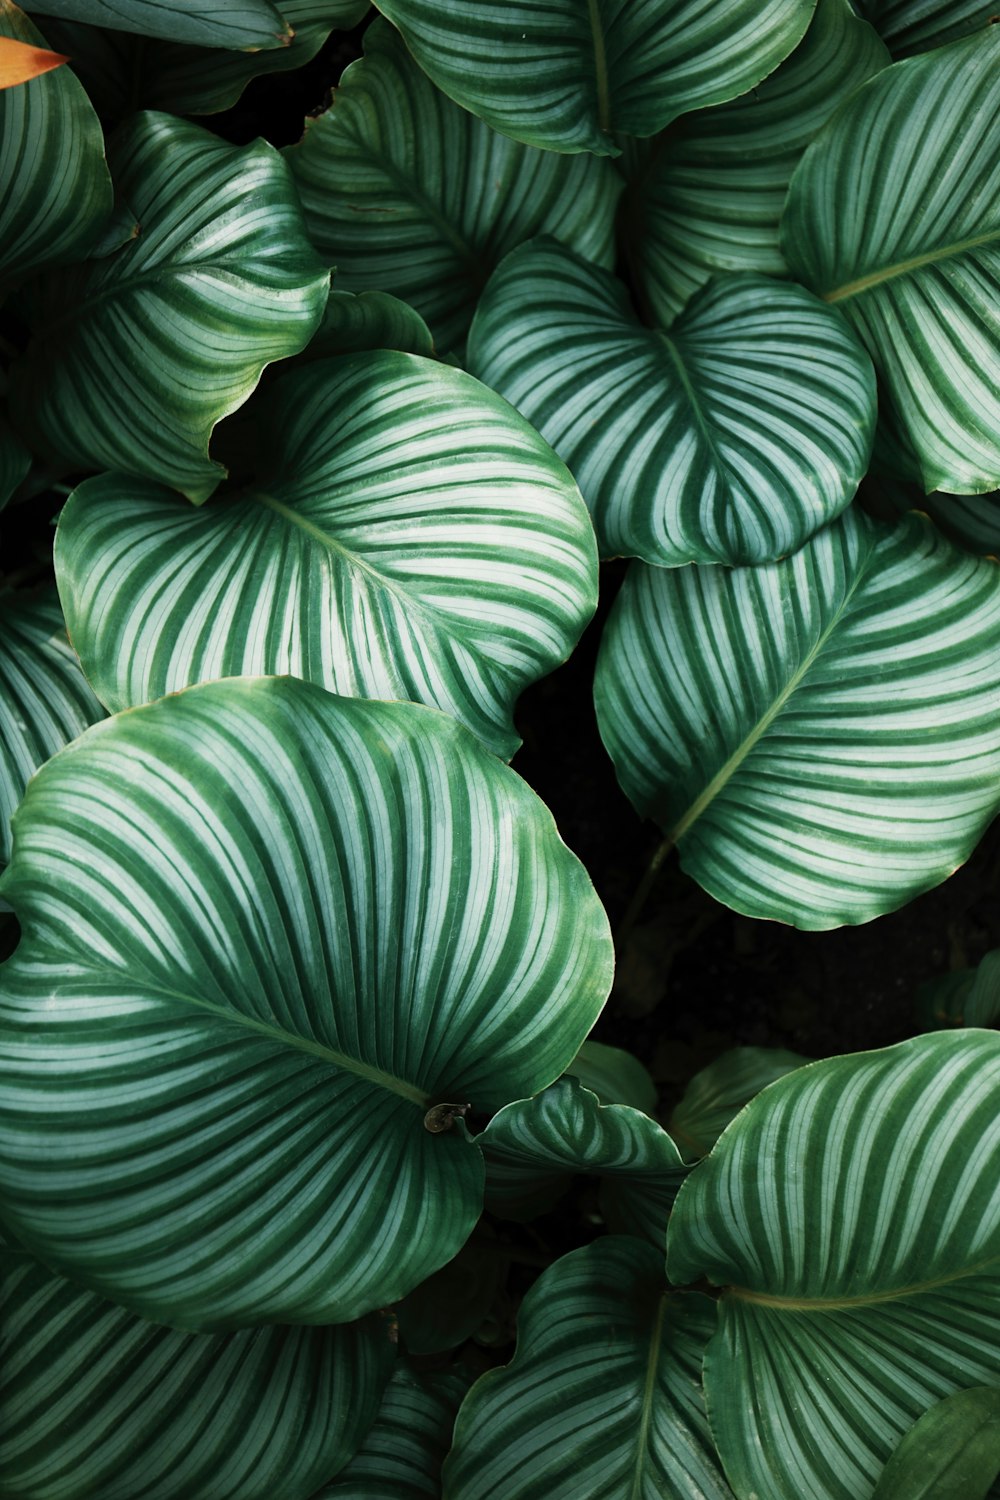 green and white leafed plants photo – Free Plant Image on Unsplash